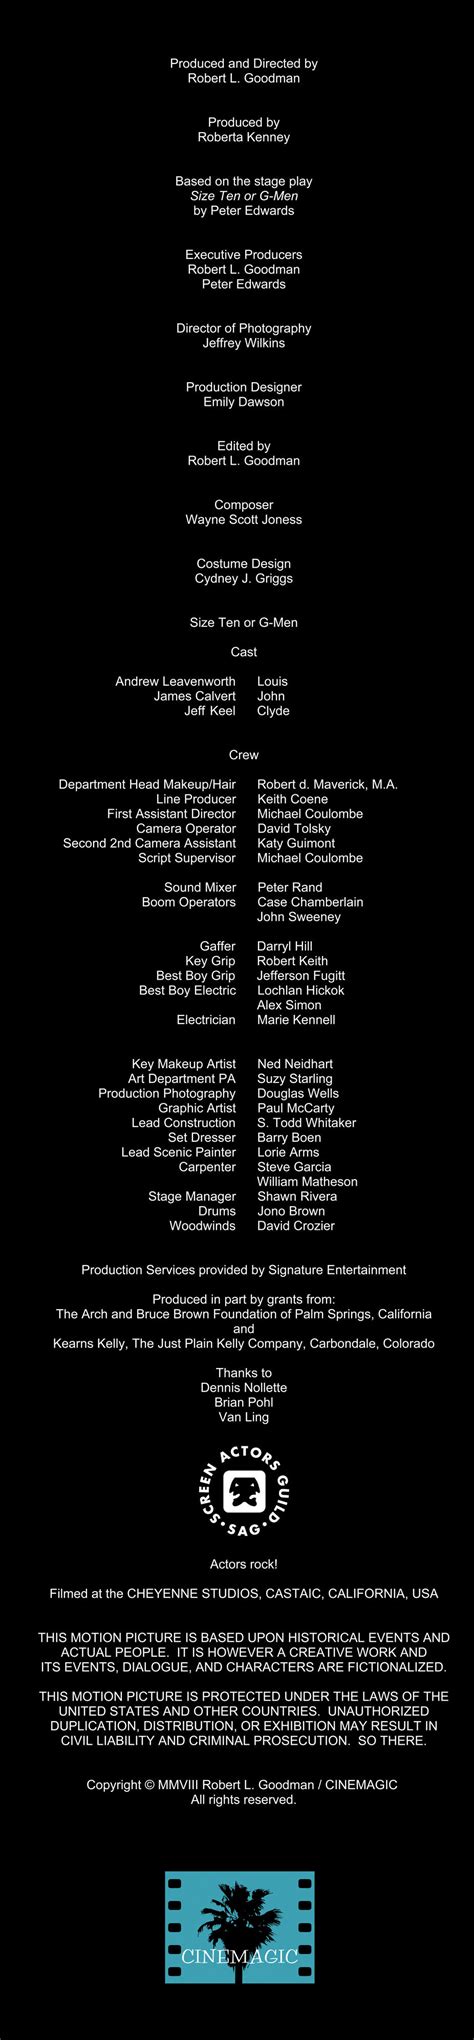 Le prince lyrics credits, cast, crew of song